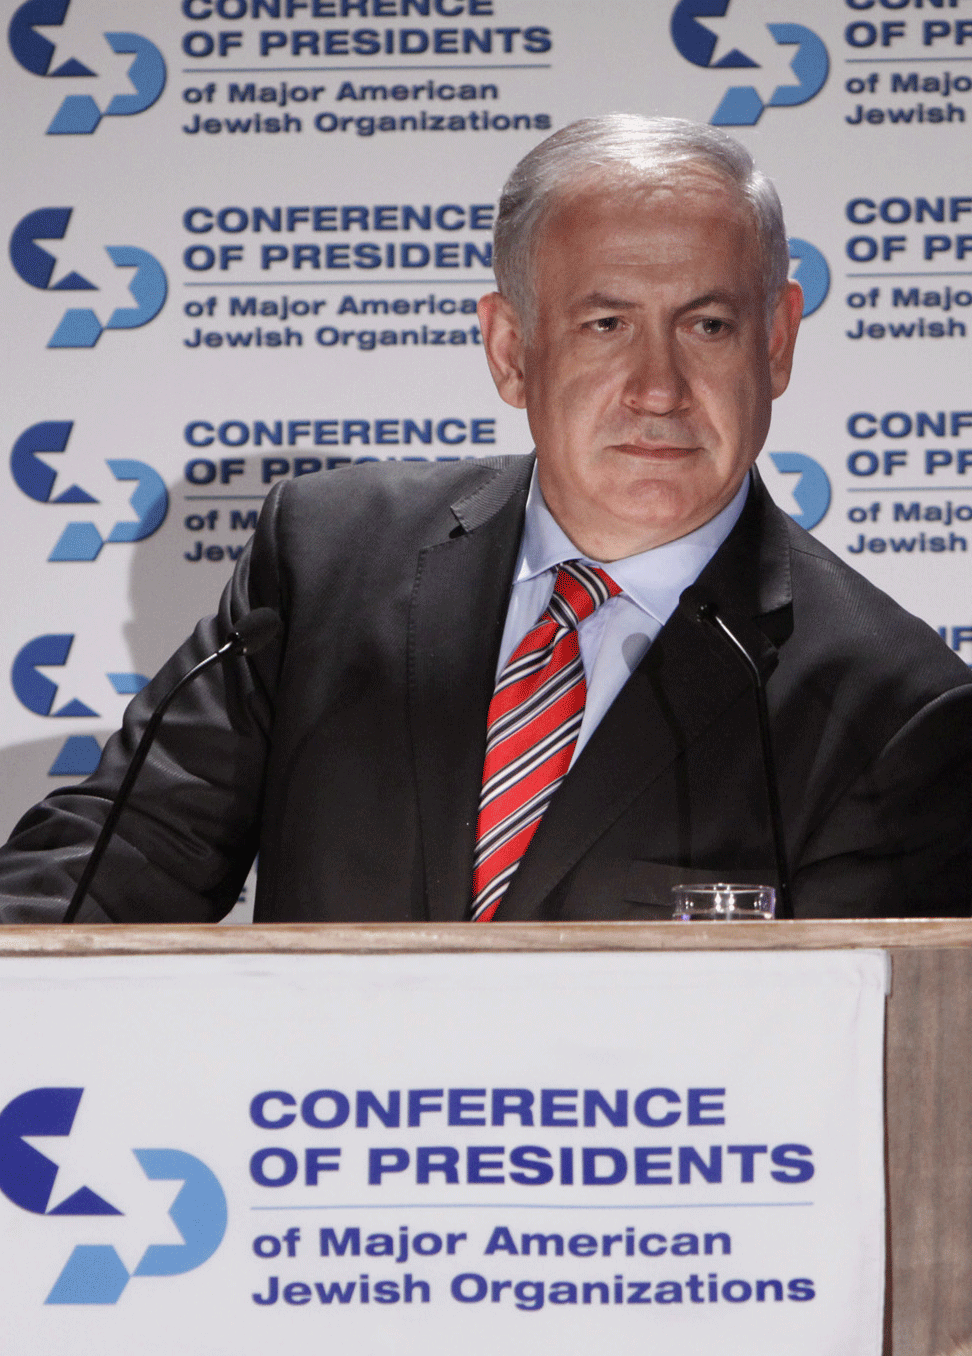 Israeli Prime Minister Benjamin Netanyahu addresses a Jewish gathering in New York on July 7, 2010. (Photo: Michael Priest Photography)